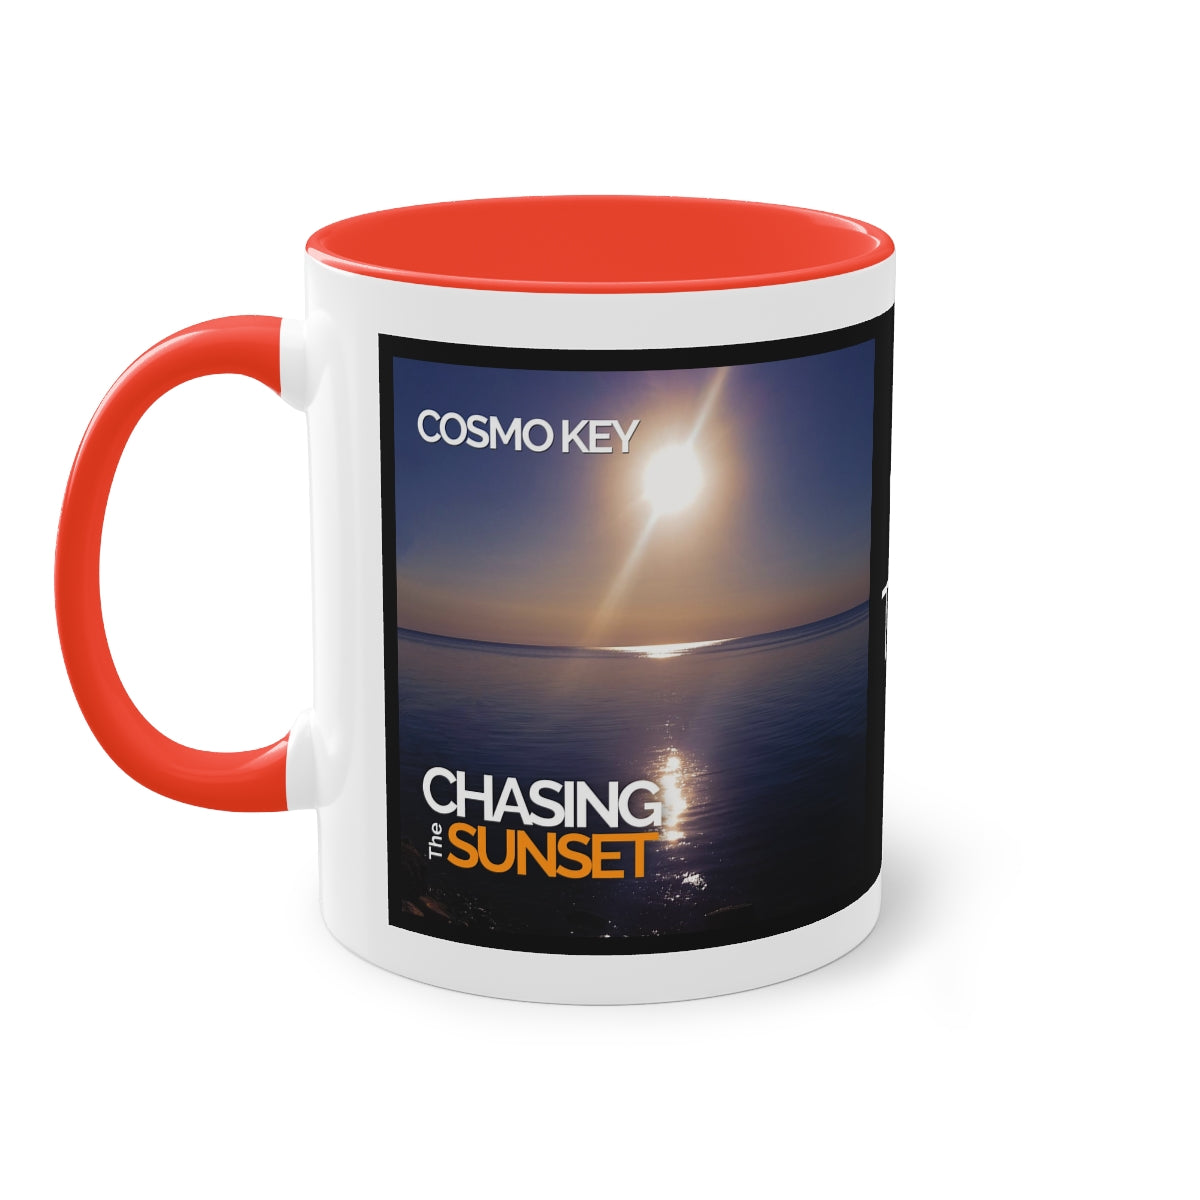 Chasing the Sunset Two-Tone Coffee Mug, 11oz